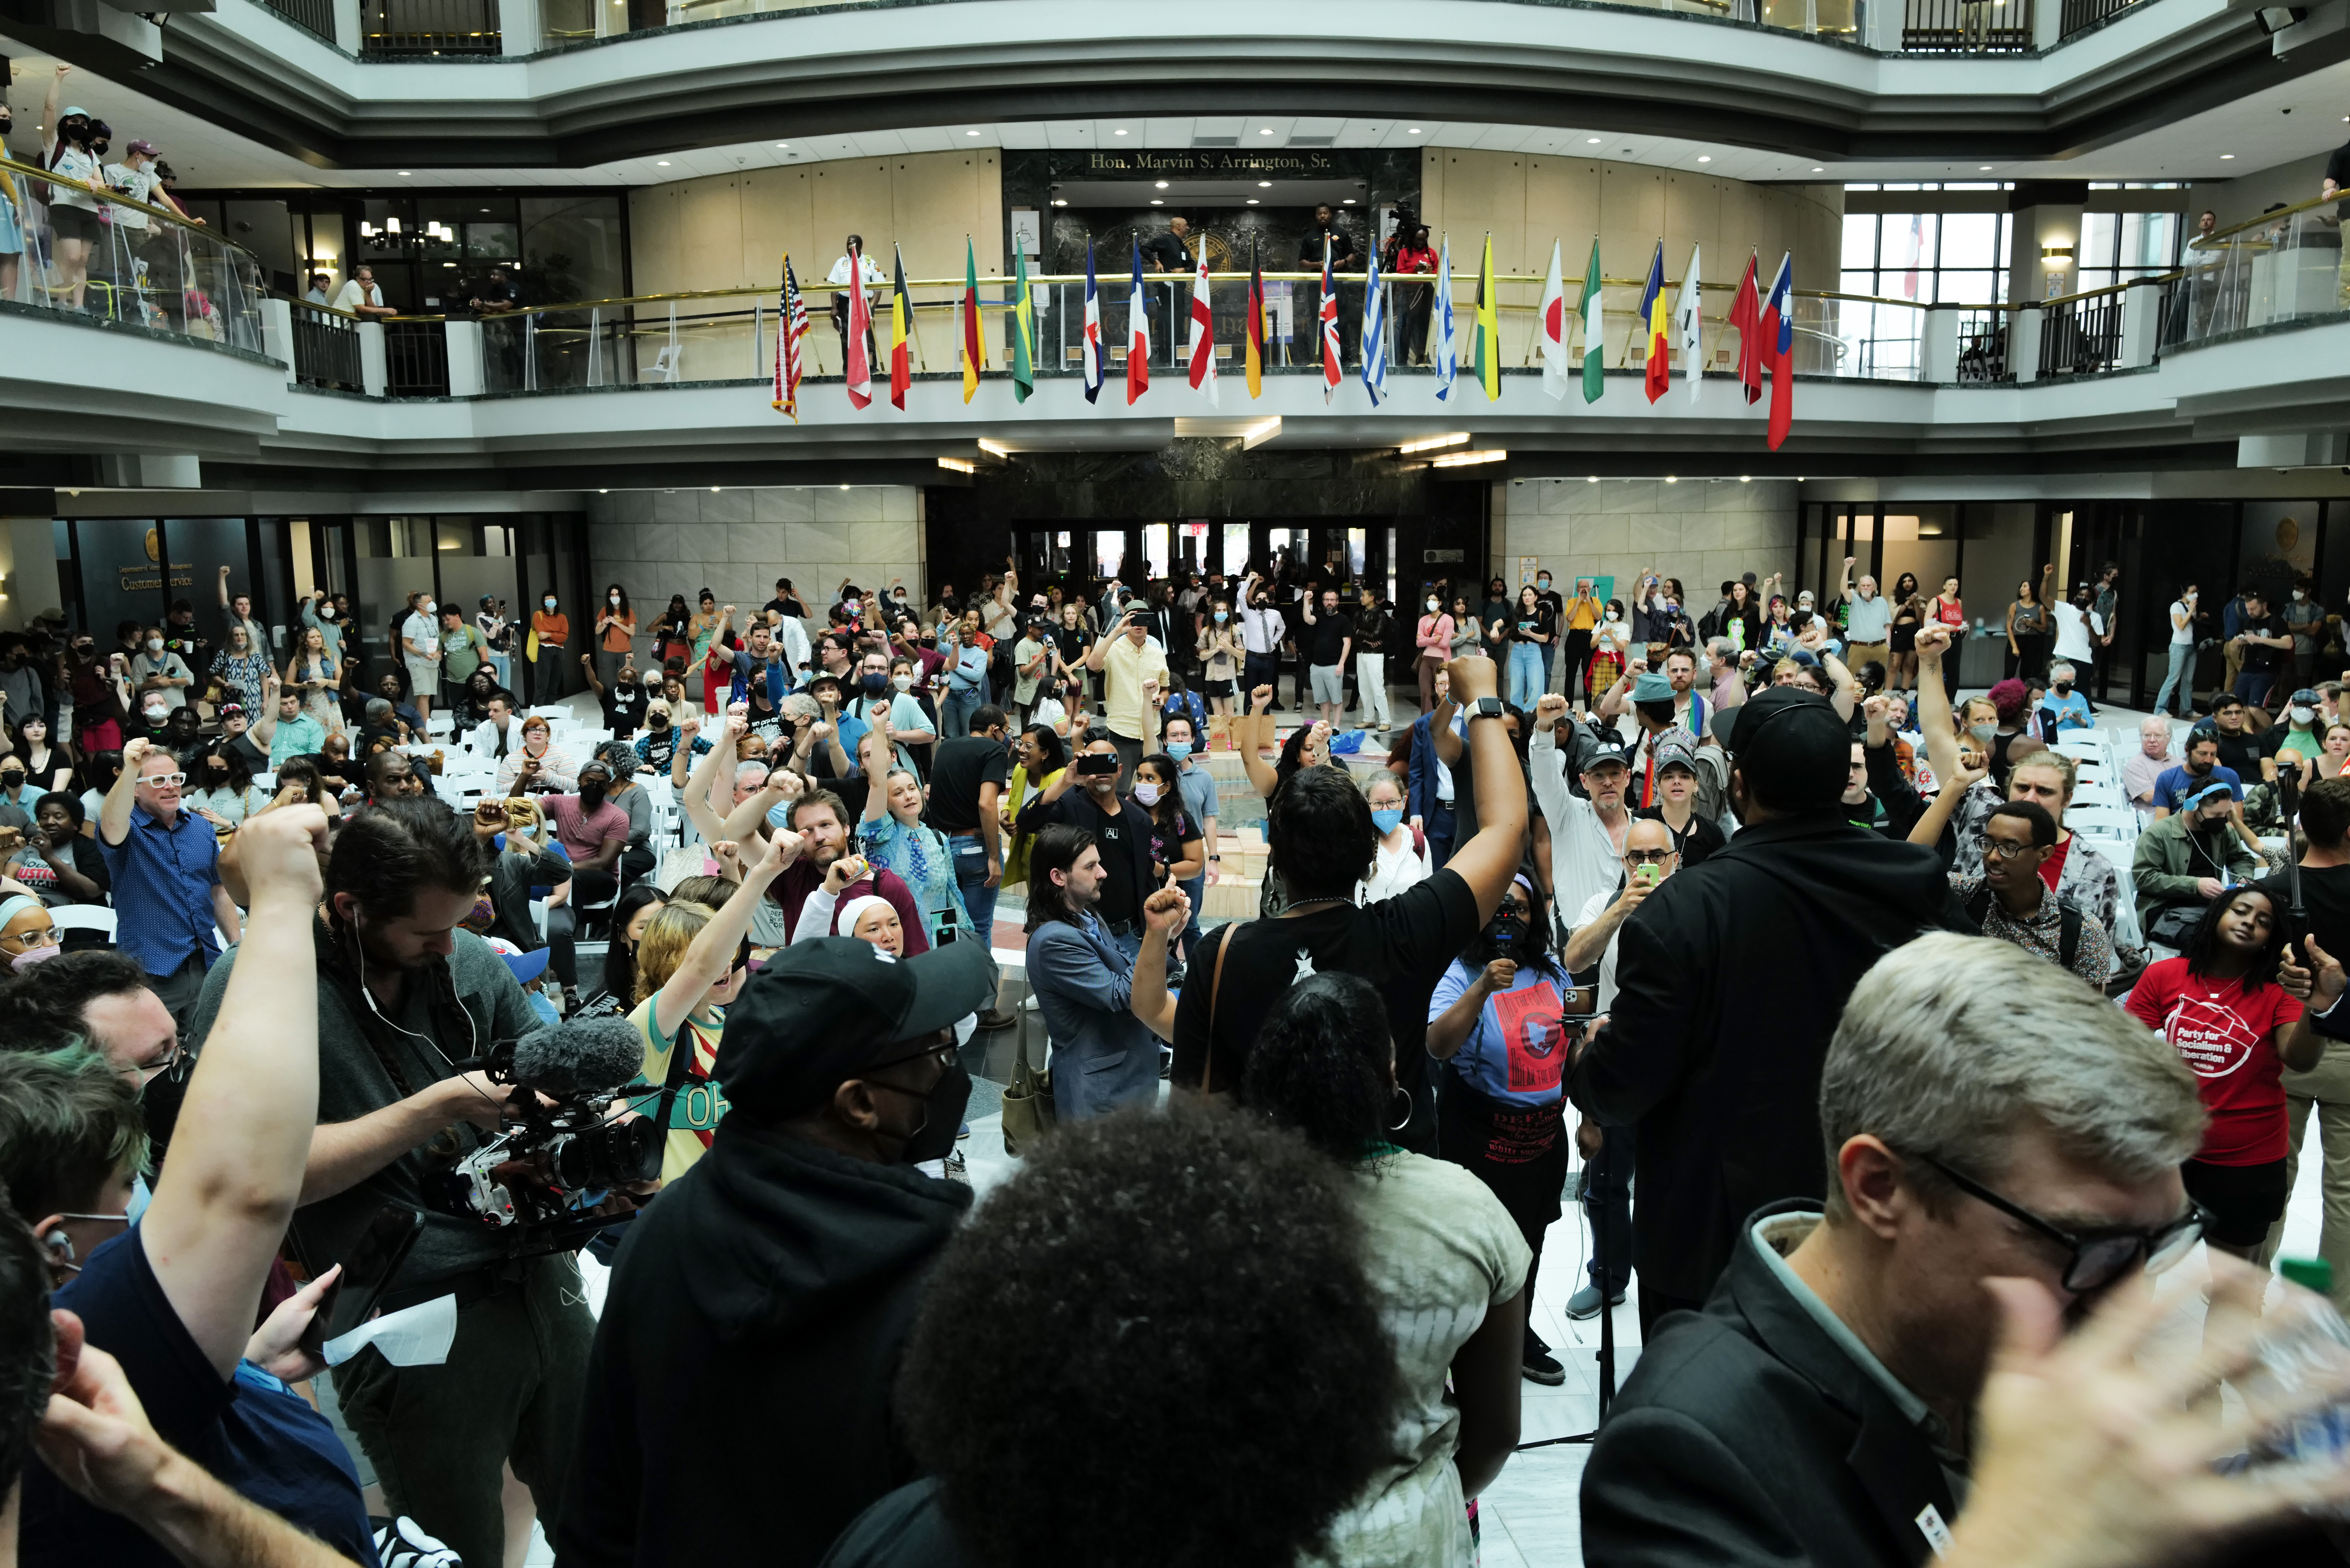 Protestors at City Hall in Atlanta